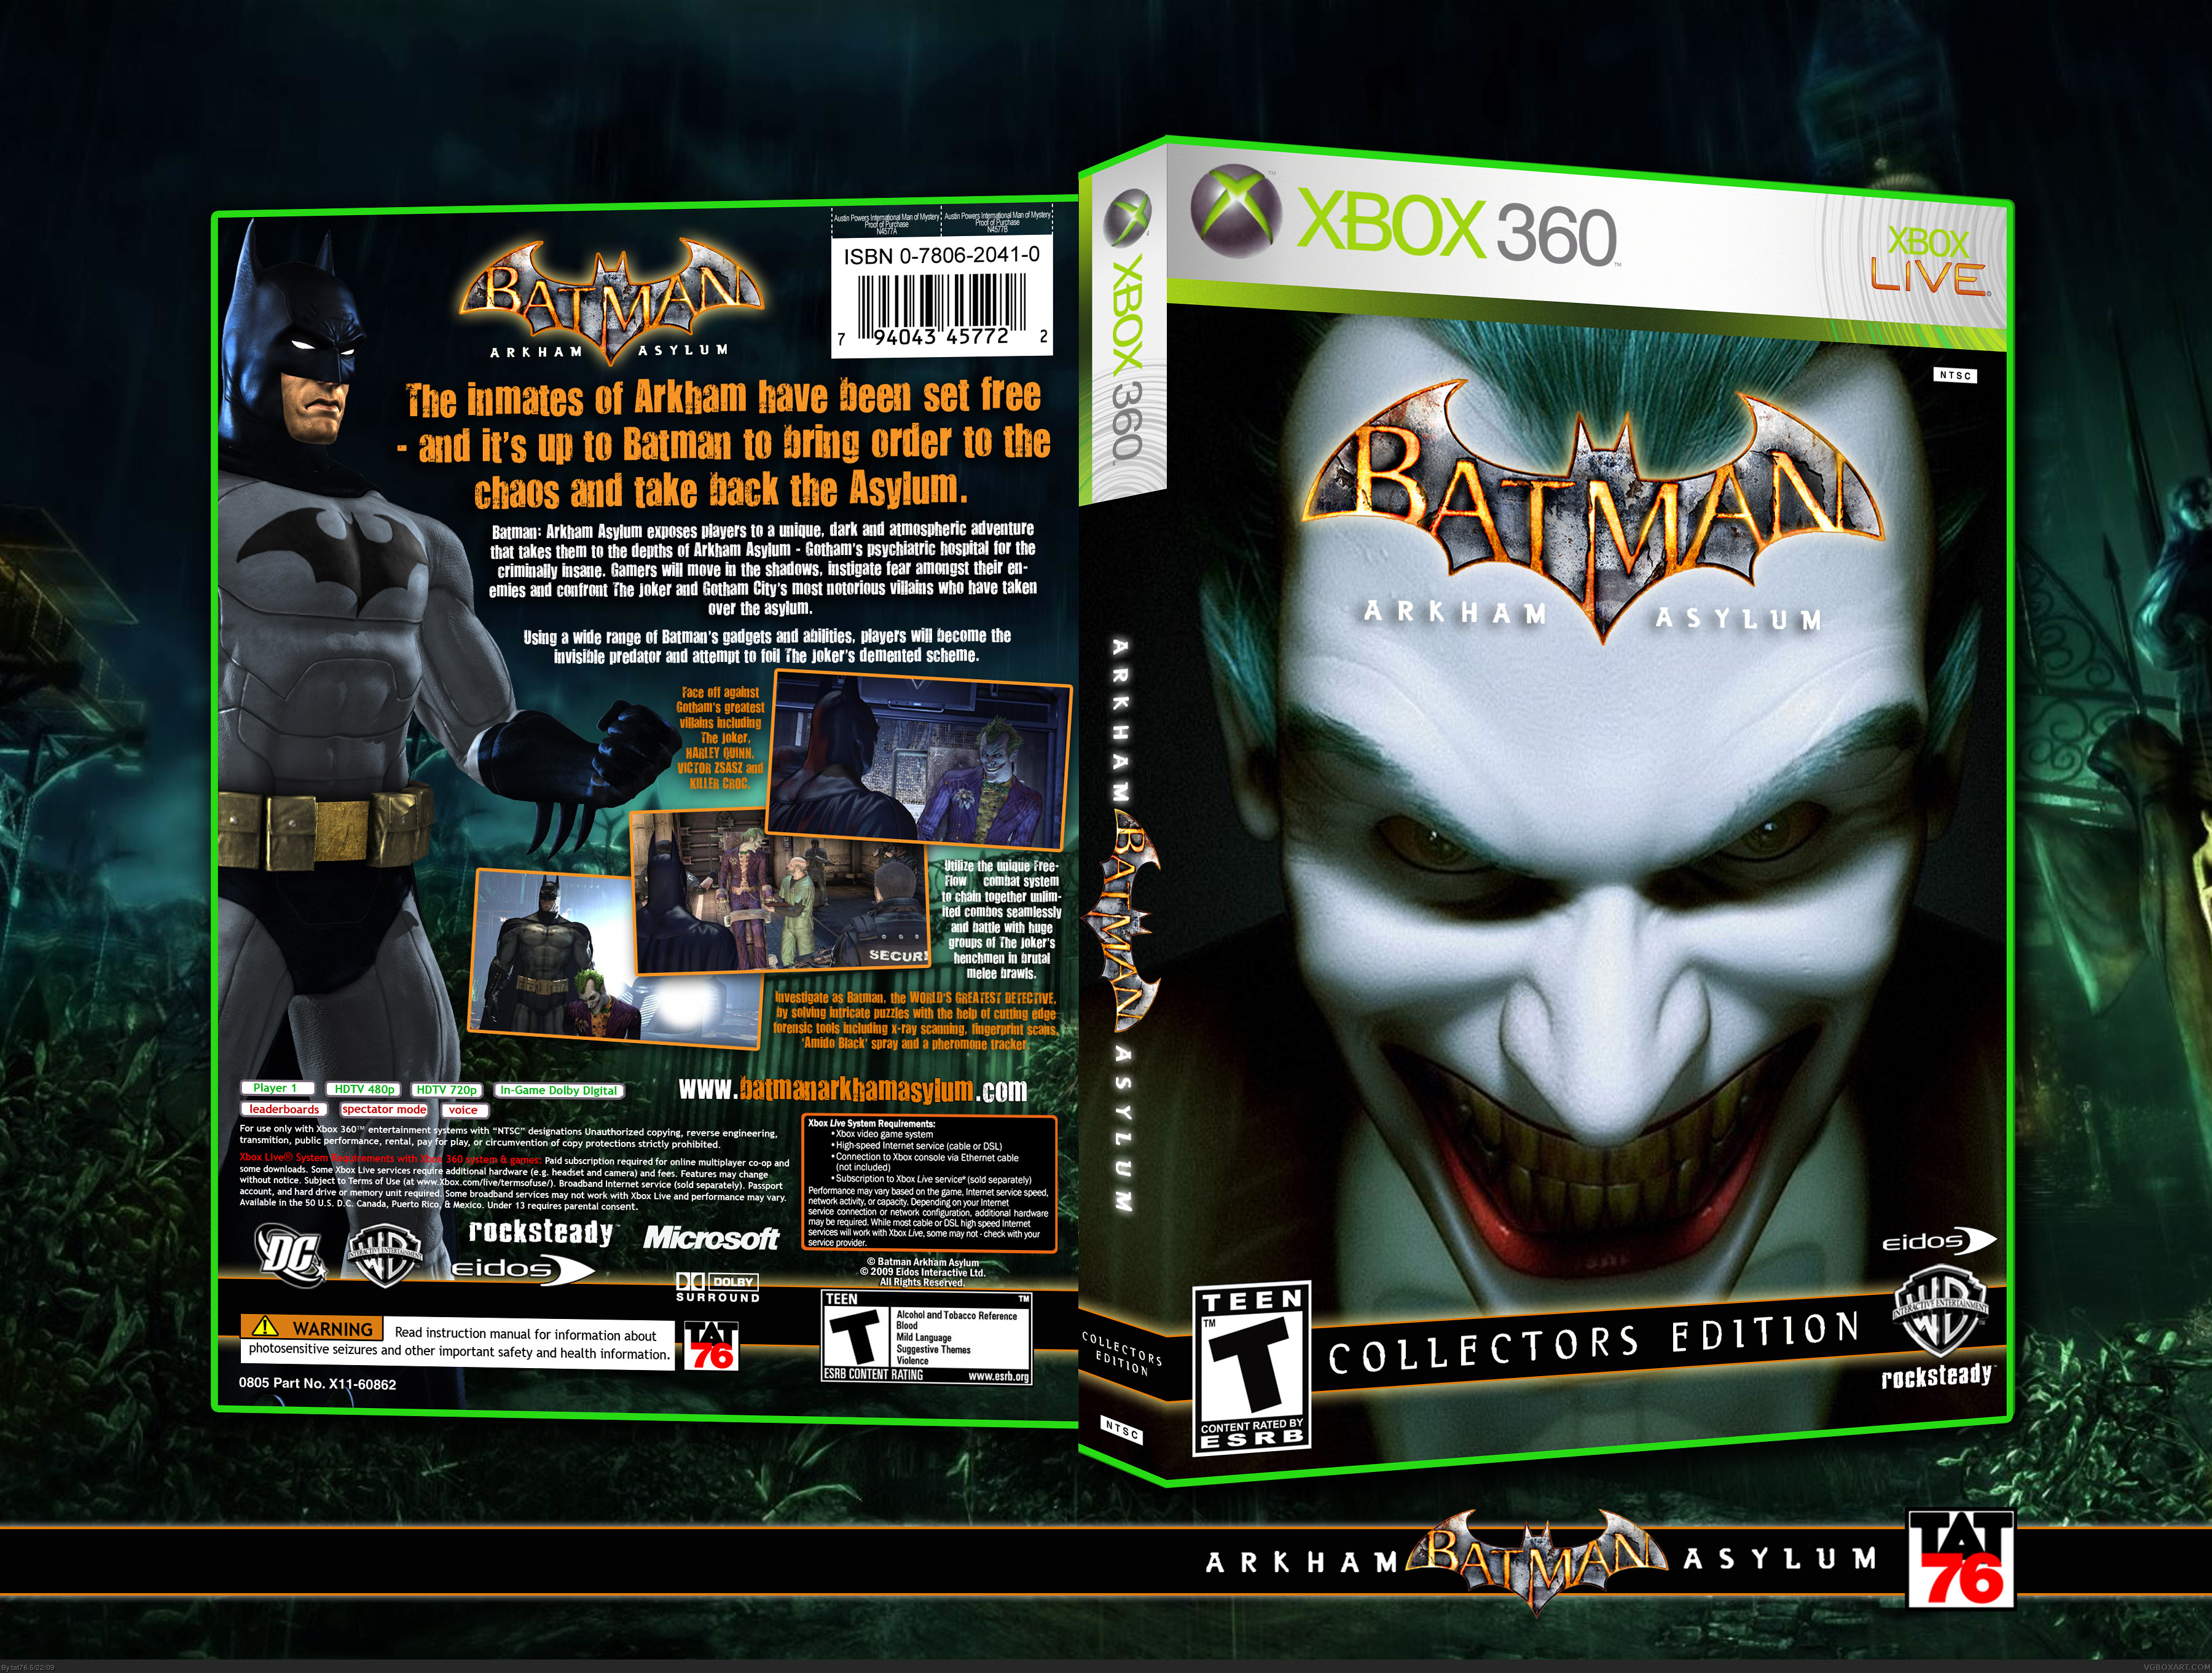 Batman Arkham Asylum Collectors Edition box cover